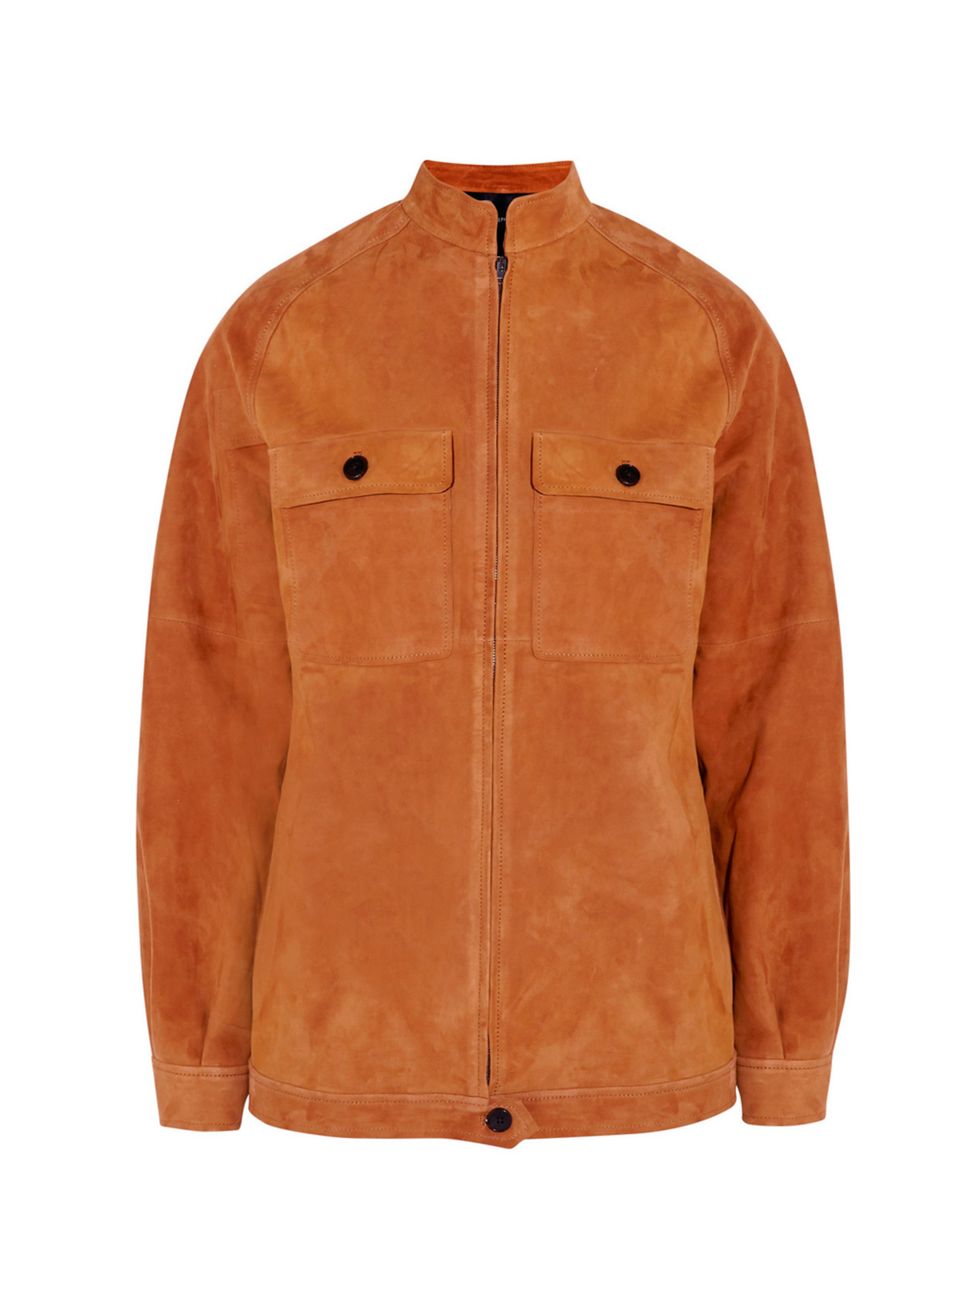 Brown, Jacket, Sleeve, Collar, Coat, Textile, Orange, Outerwear, Tan, Fashion, 